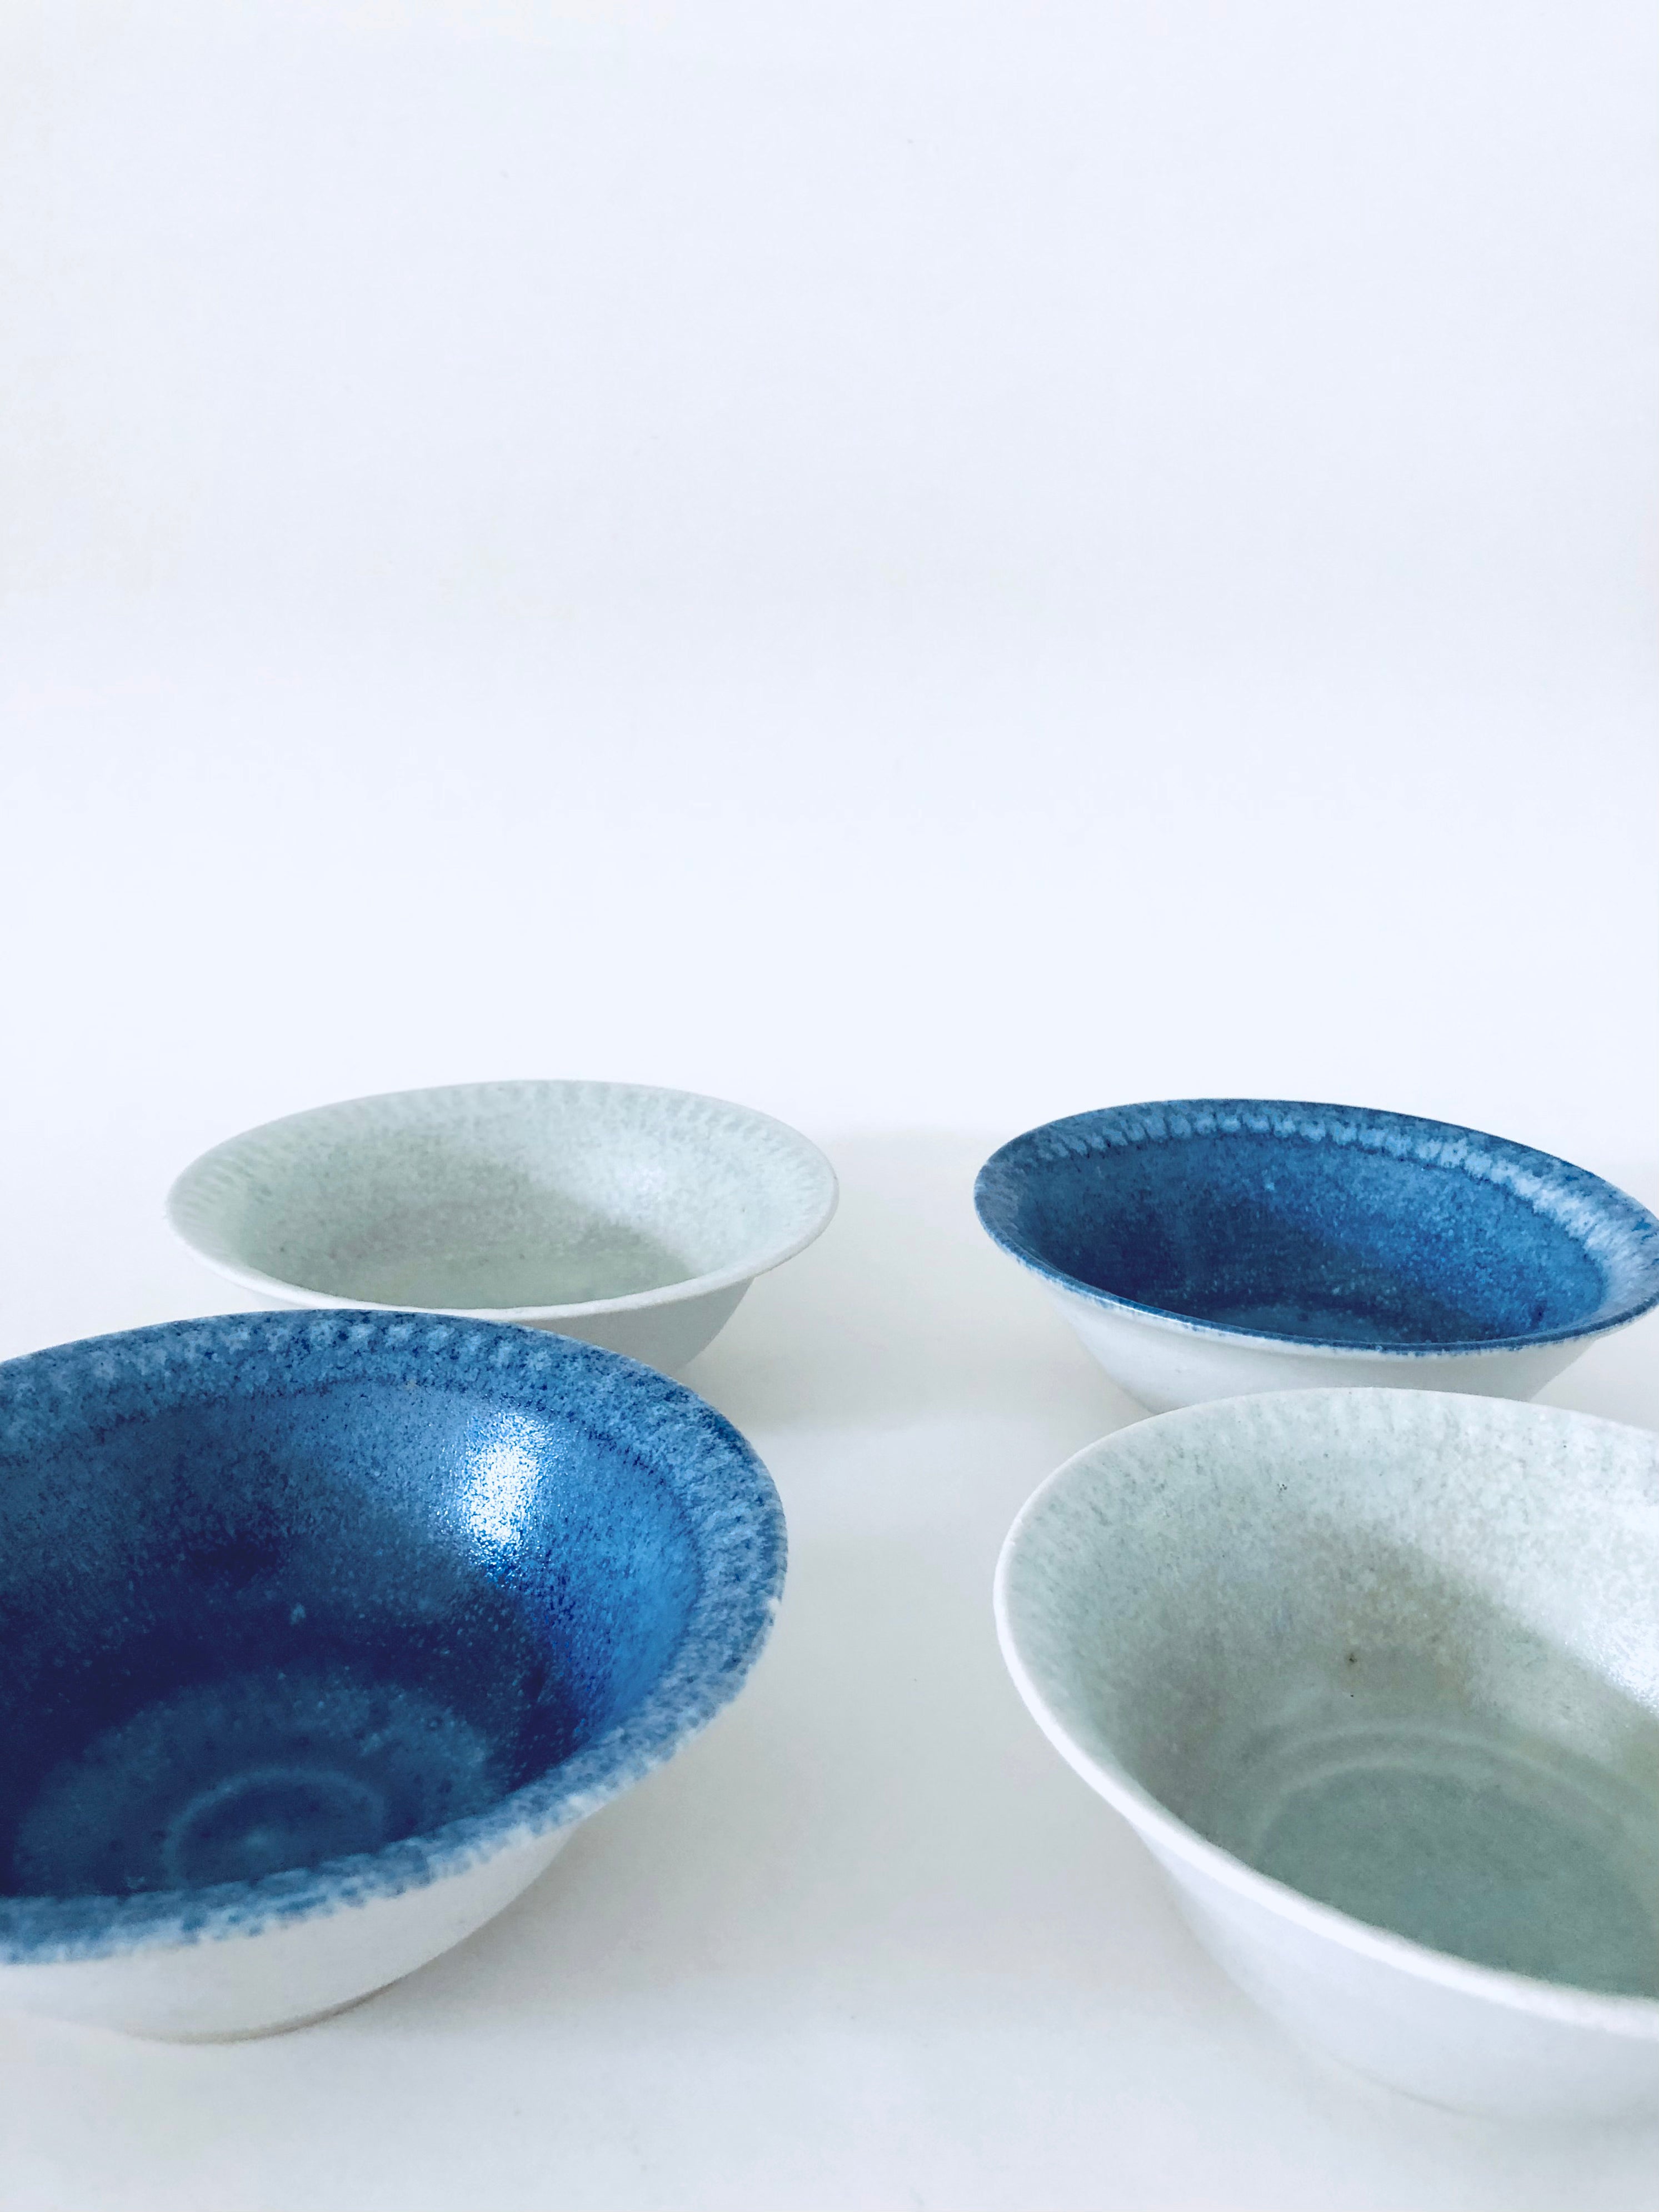 Rimy Green Bowls by Vivian Lam